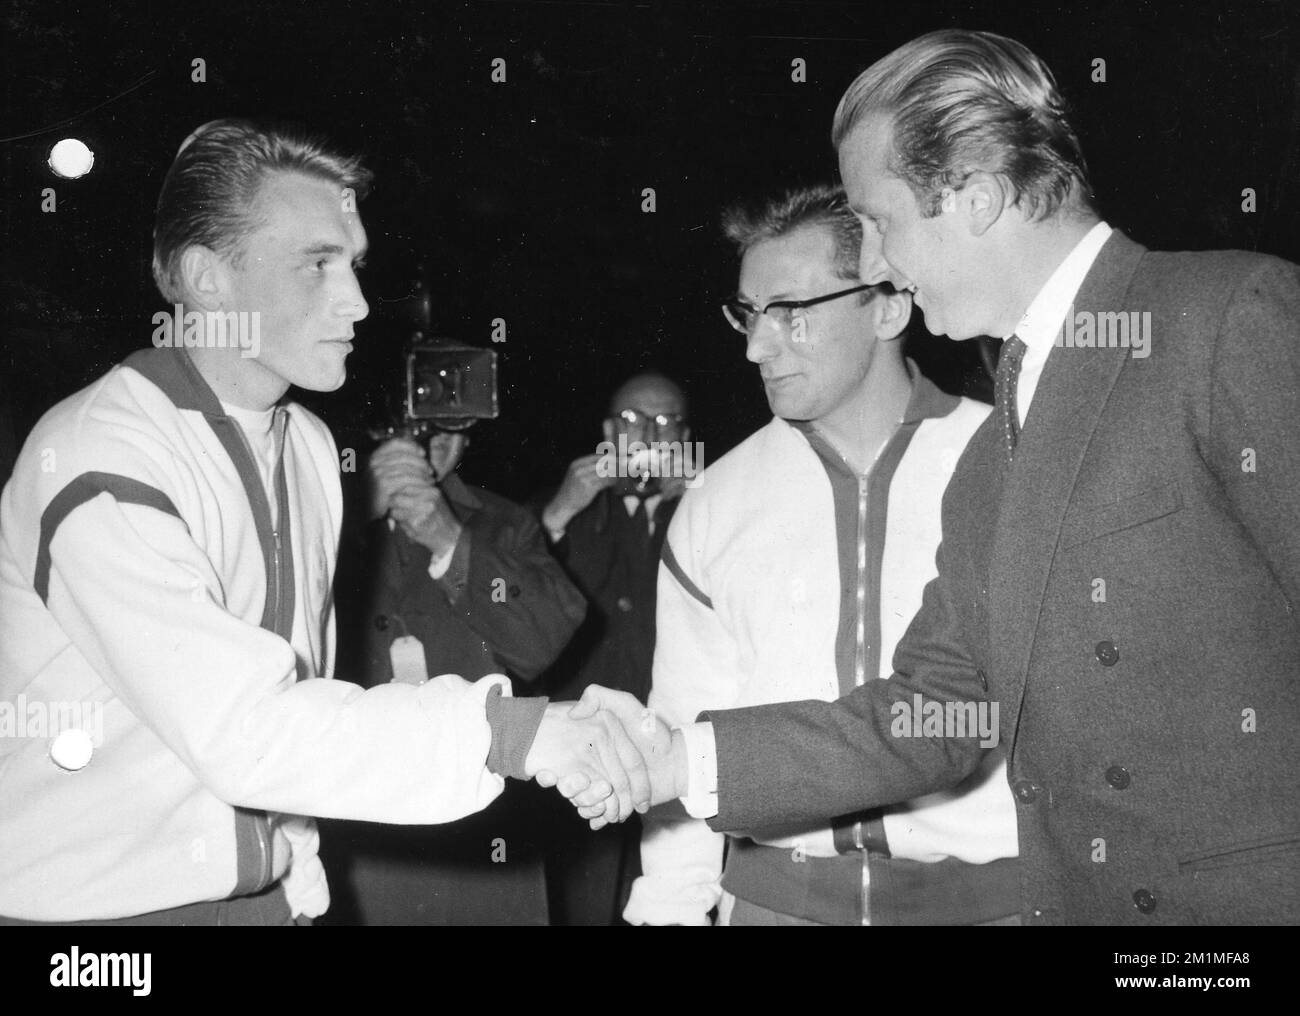 Prince Albert congratulates Paul Van Himst (left) after the Anderlecht v Bologna match in the European Cup. Stock Photo